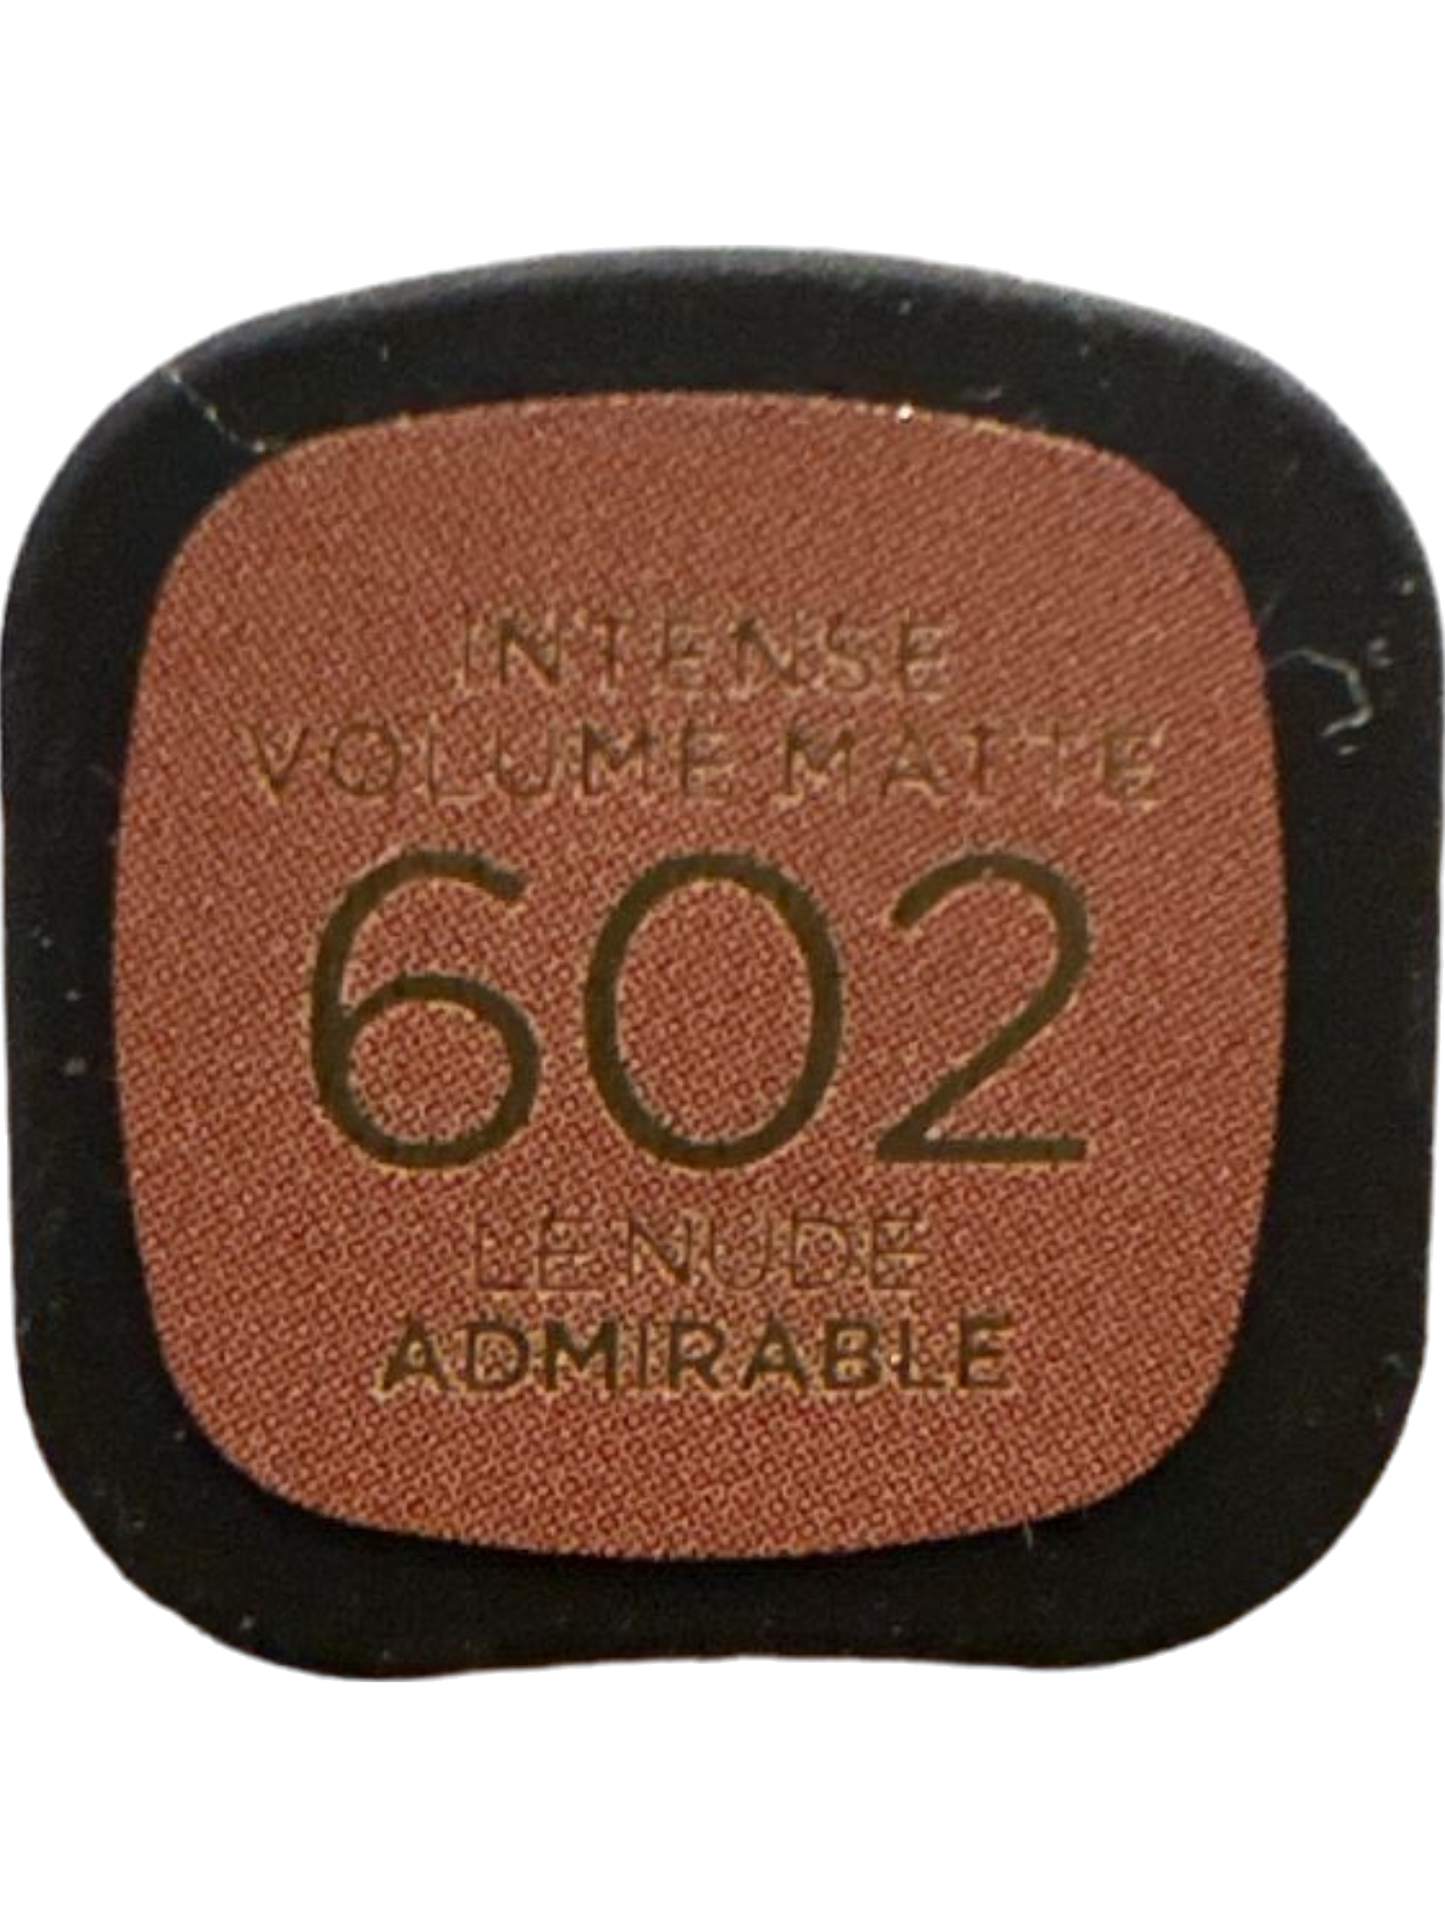 L'Oreal Paris Nude Volume Matte Long-lasting Lipstick 602 NUDE ADMIRABLE